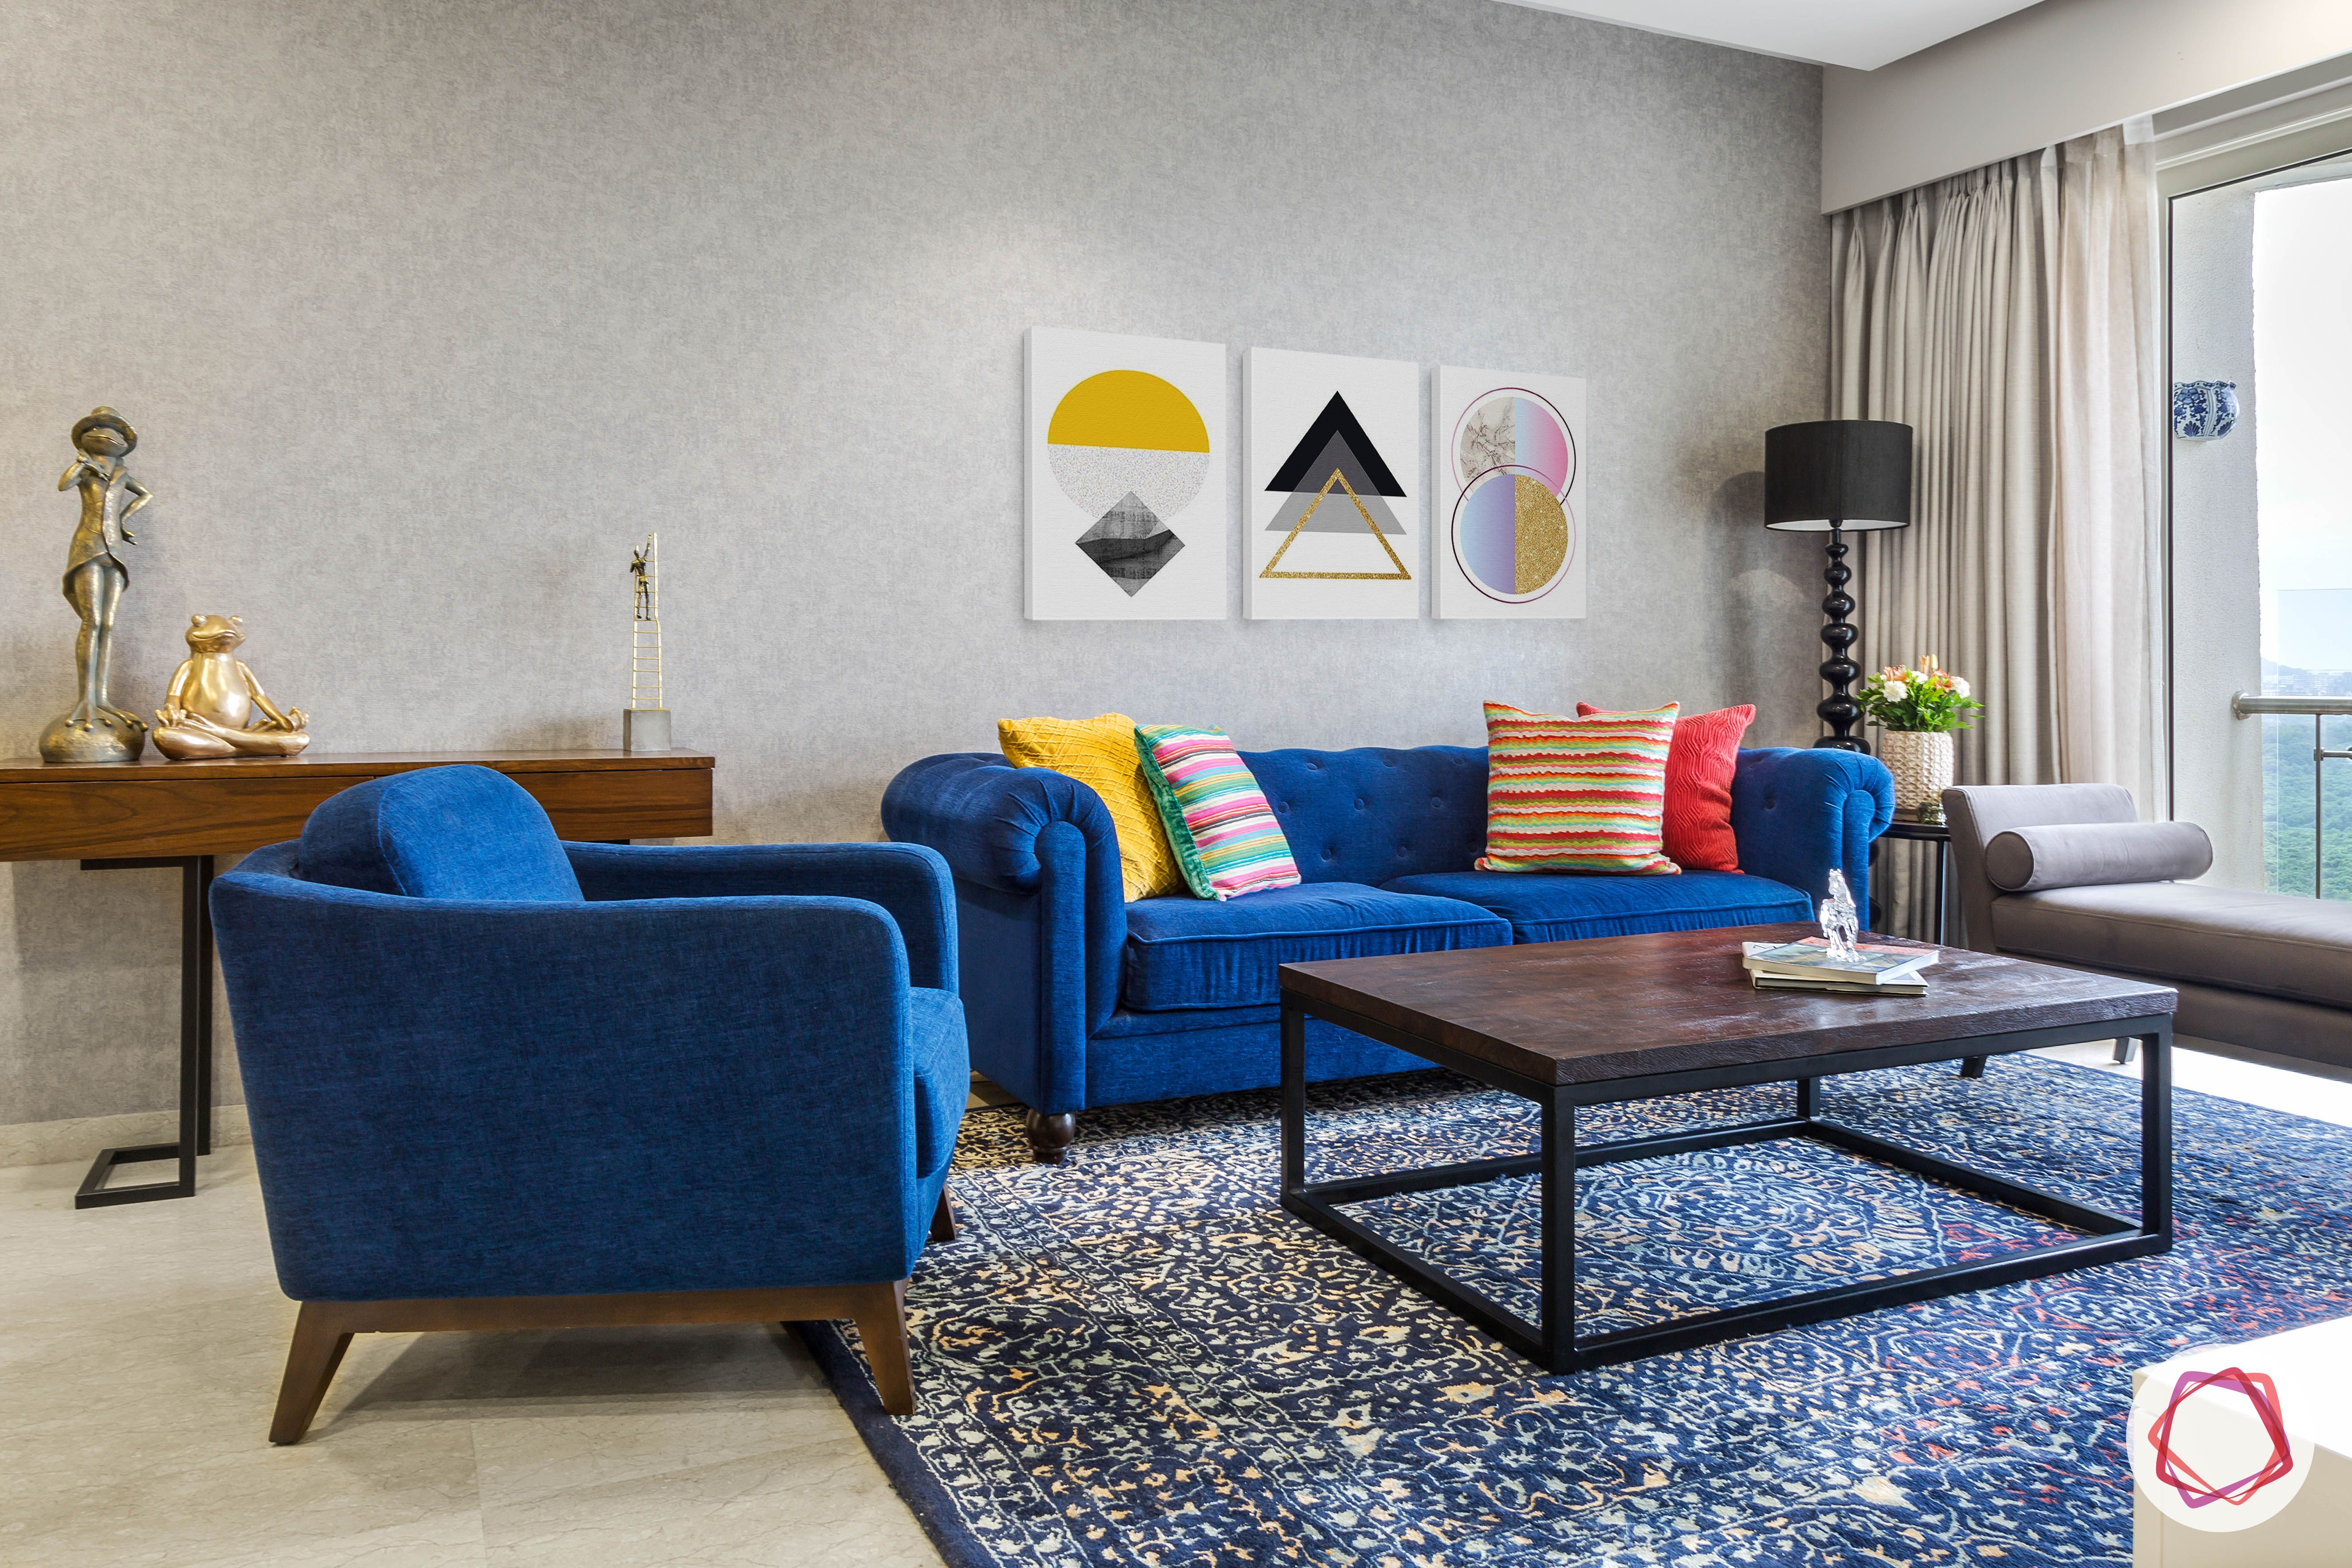 lodha group-living room designs-blue sofa designs-persian rug designs